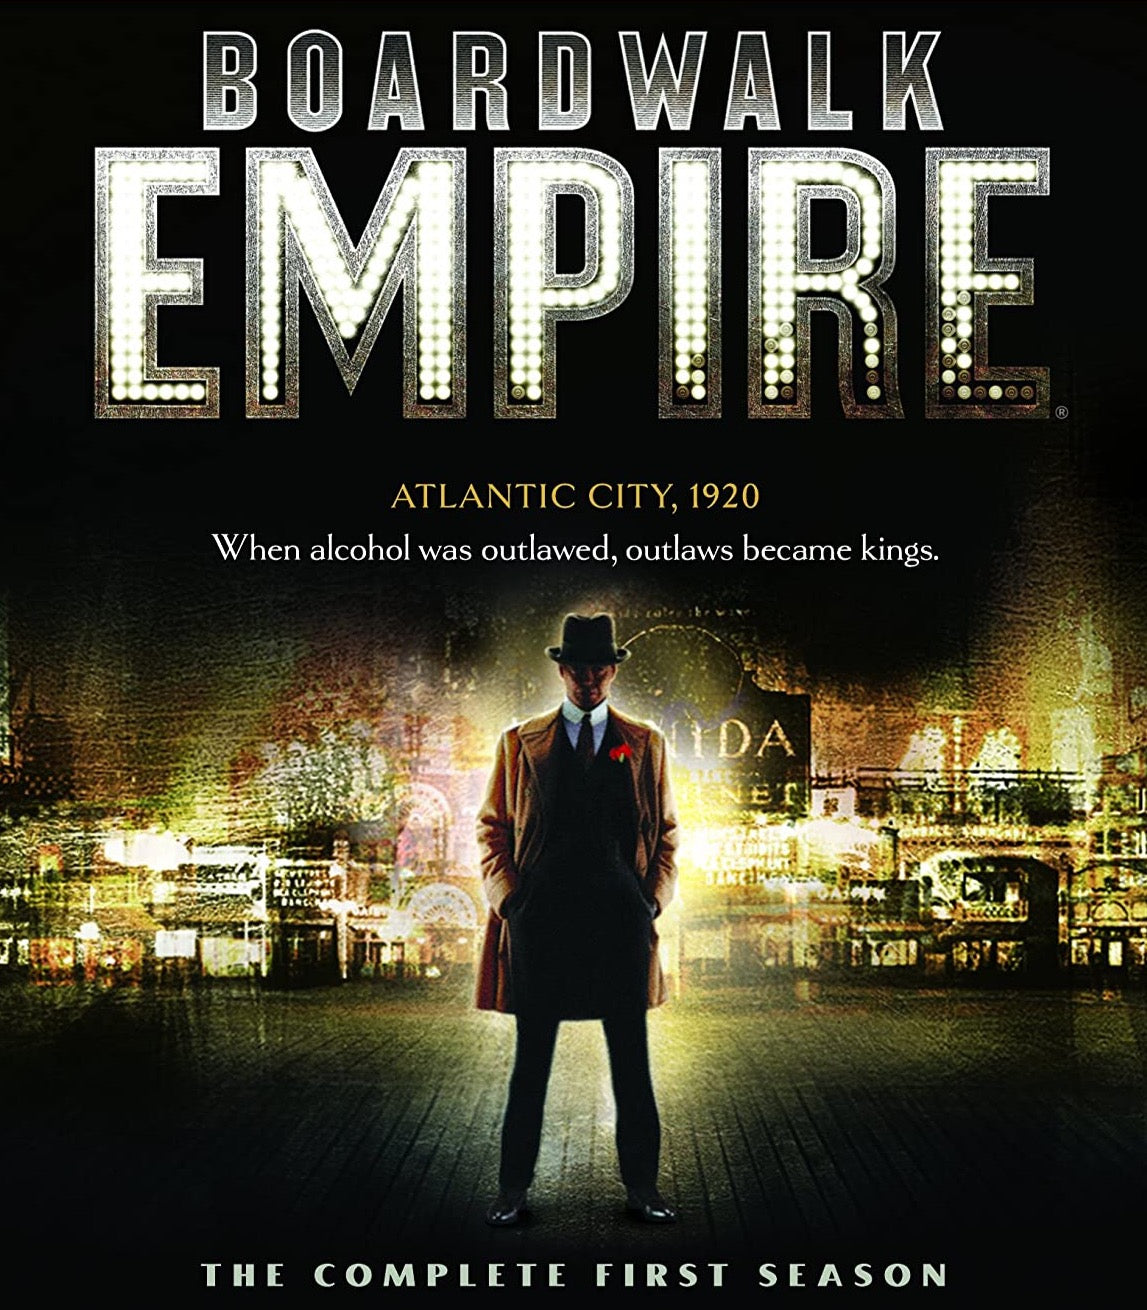 Boardwalk Empire: The Complete First Season (2010) Vudu HD redemption only